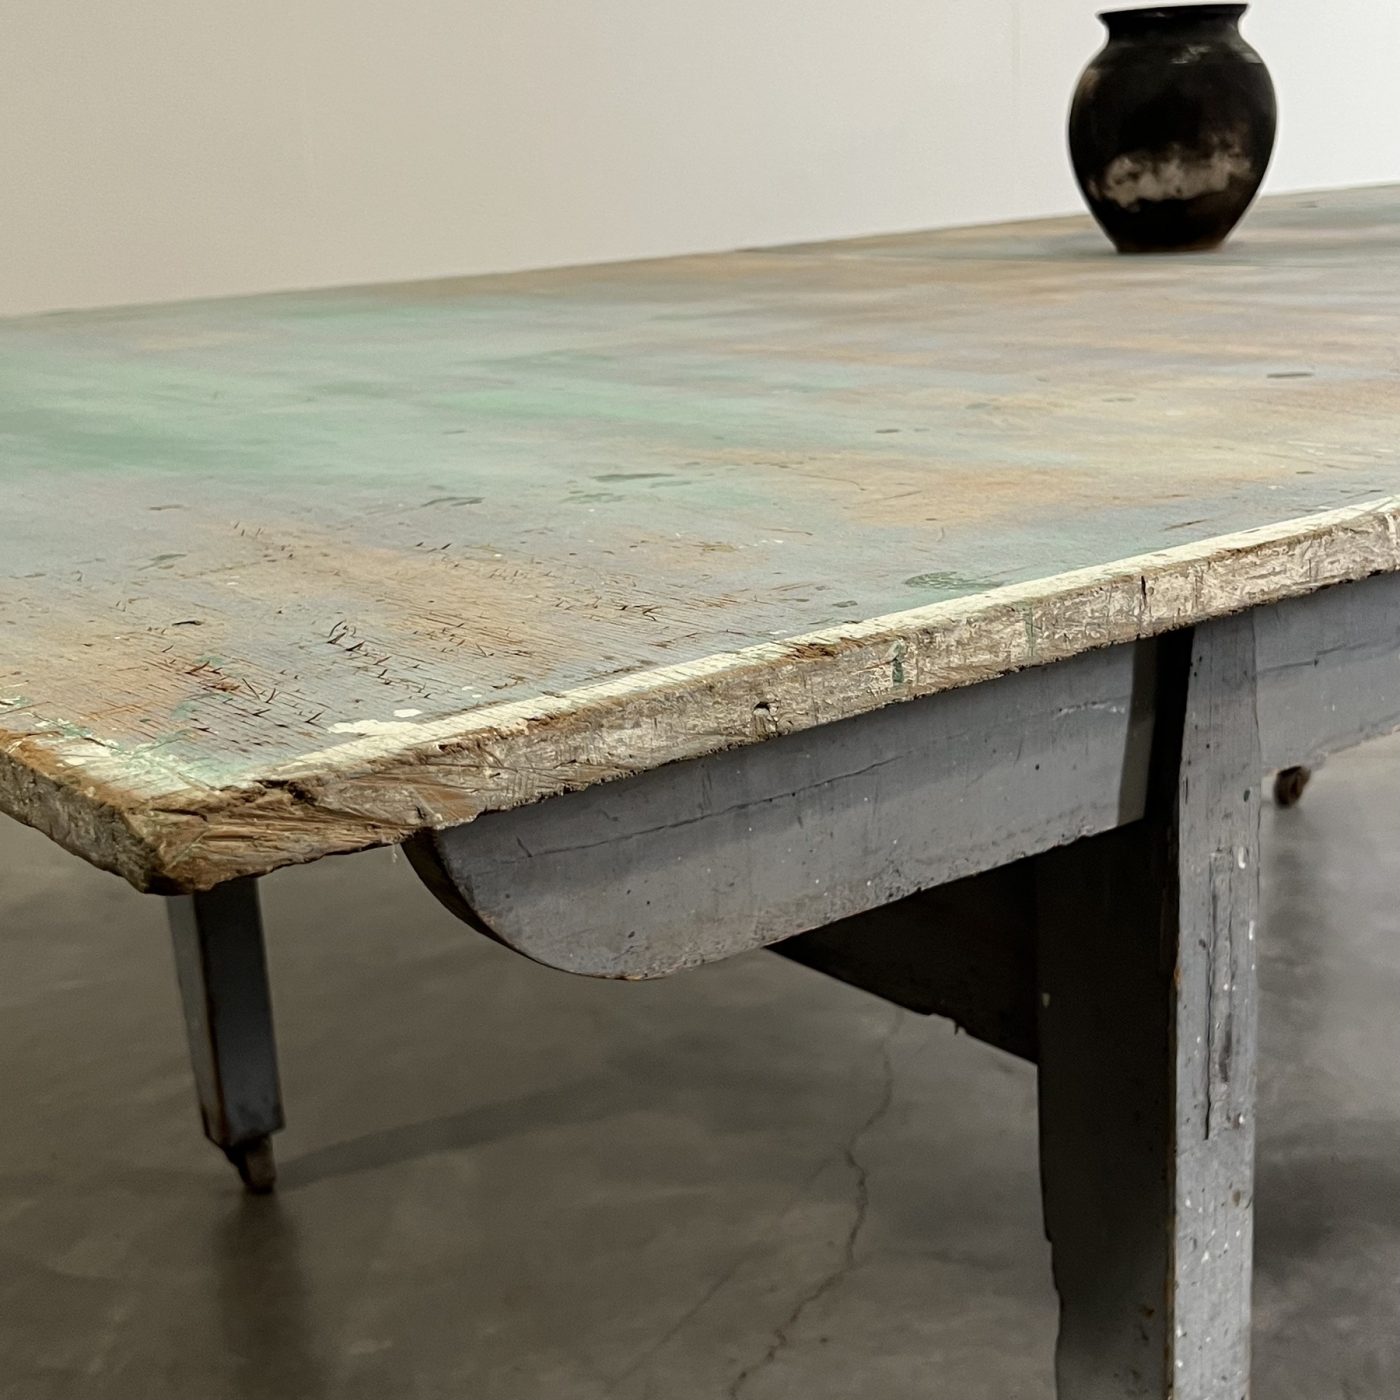 objet-vagabond-work-table0003